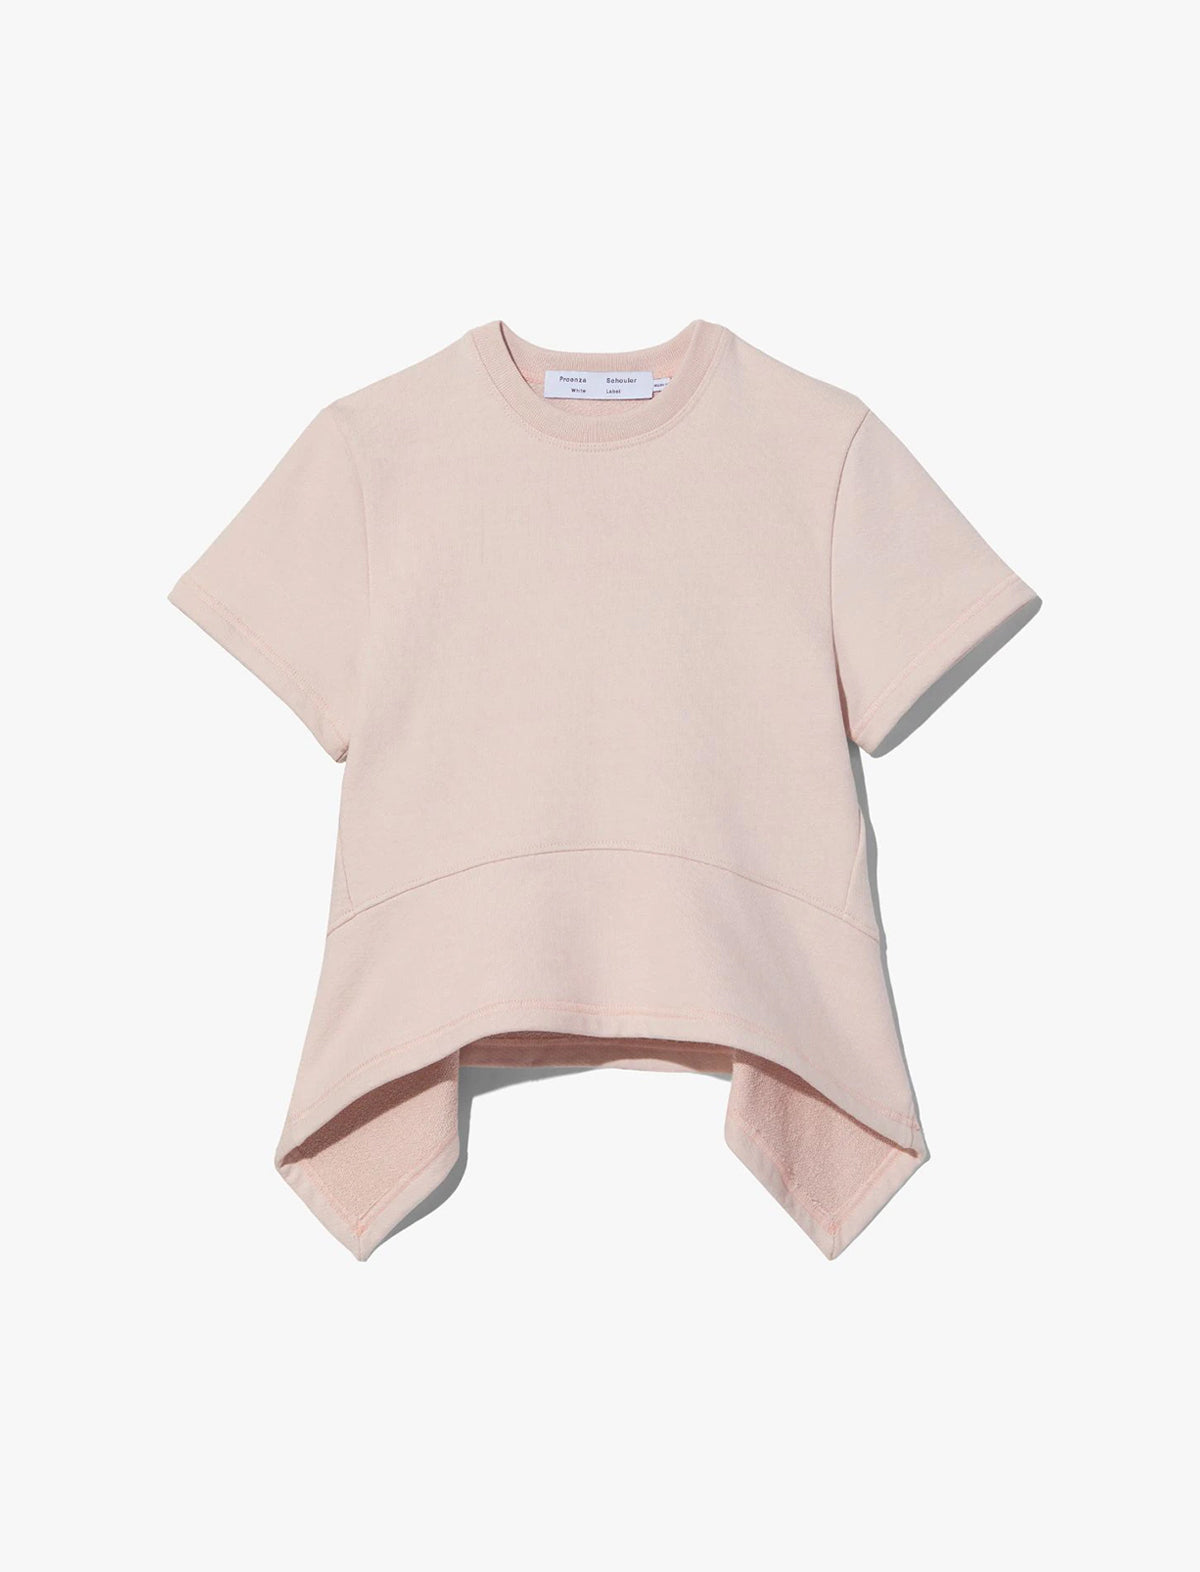 PROENZA SCHOULER WHITE LABEL Asymmetric T-shirt in Pink